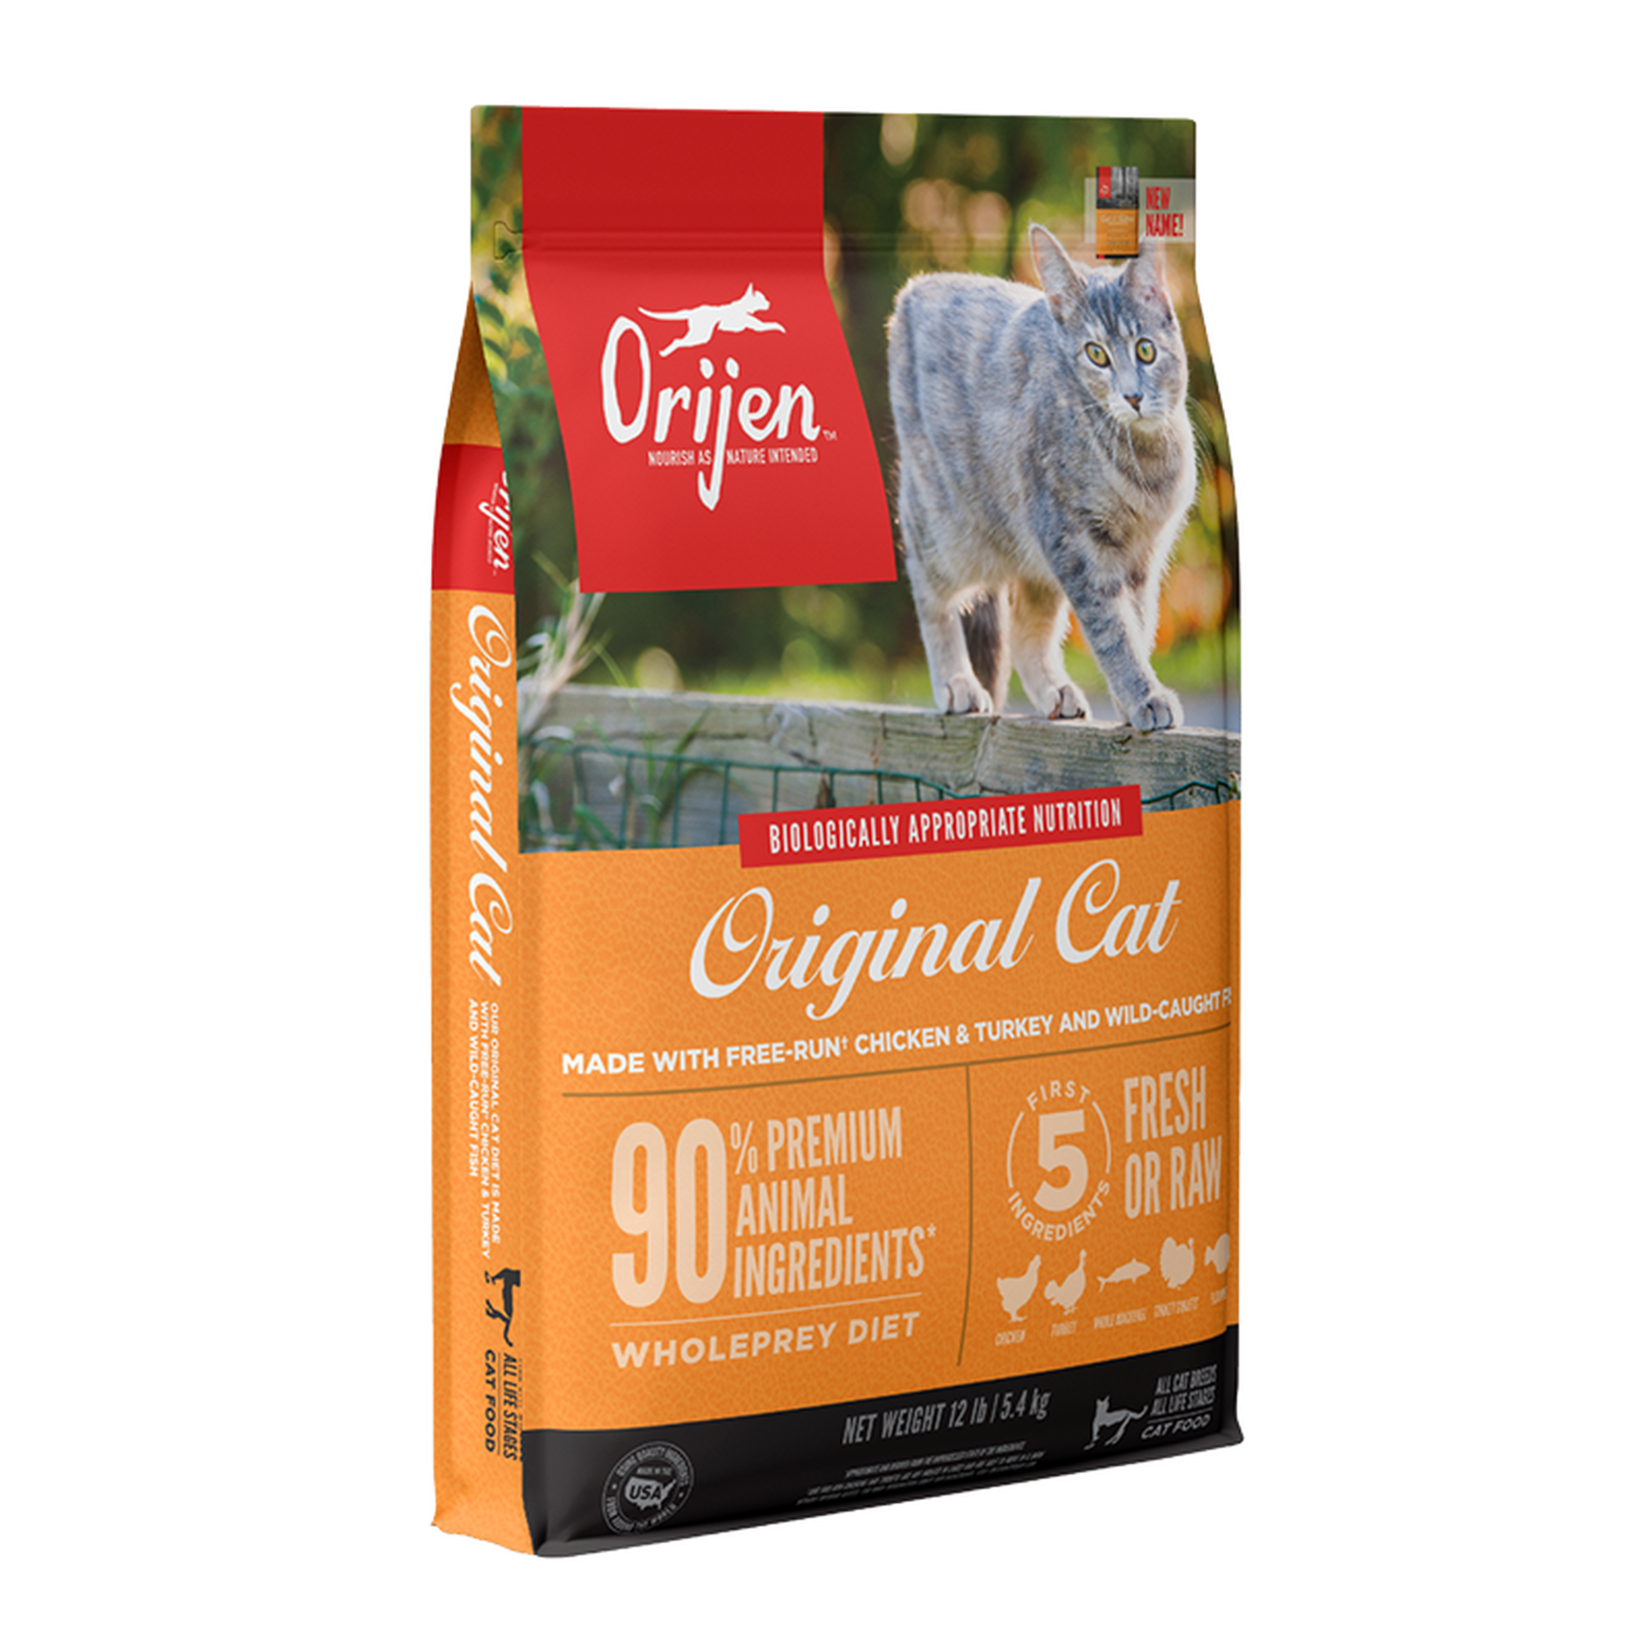 Orijen Orijen Dry Cat Food Original with Free-Run Chicken & Turkey and Wild-Caught Fish Grain Free